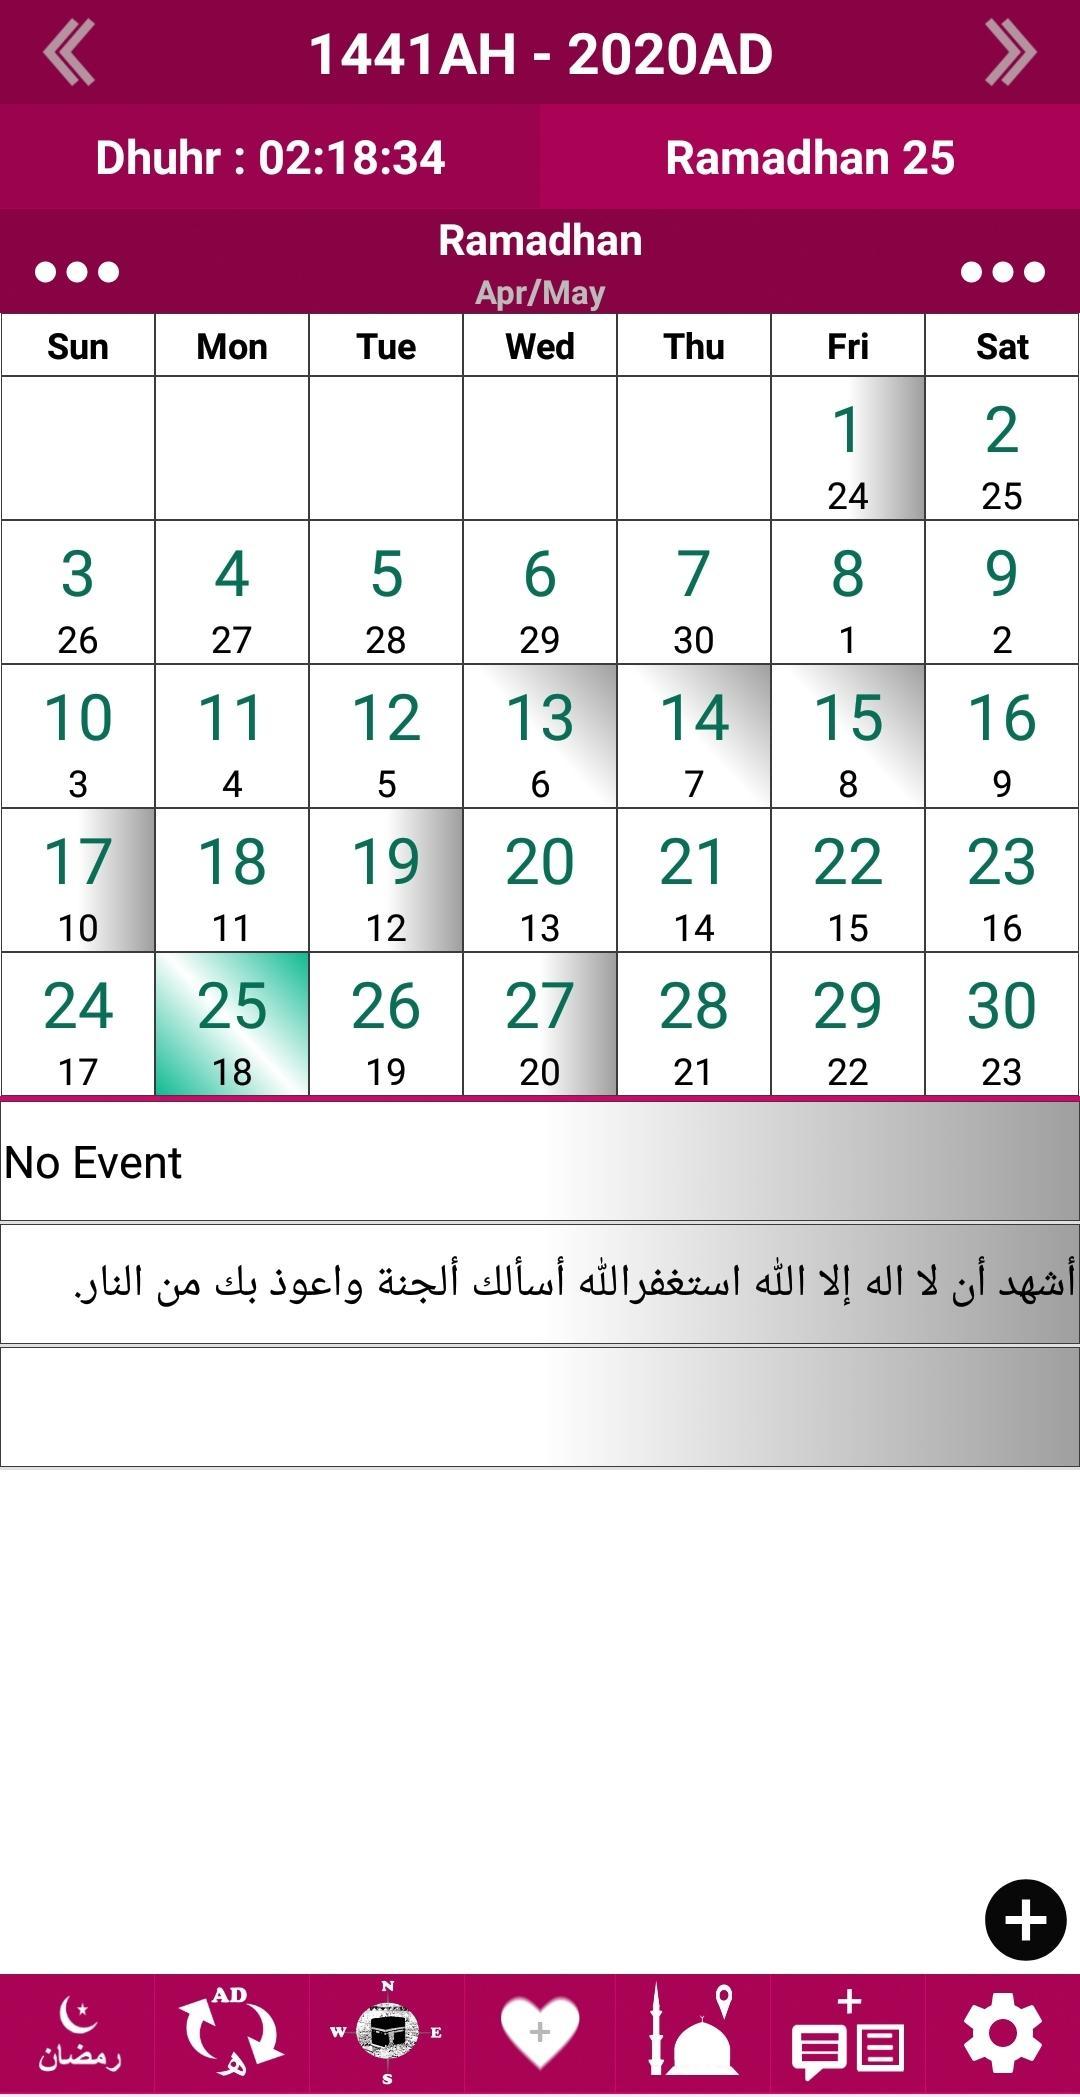 Printable Islamic Calendar 2021